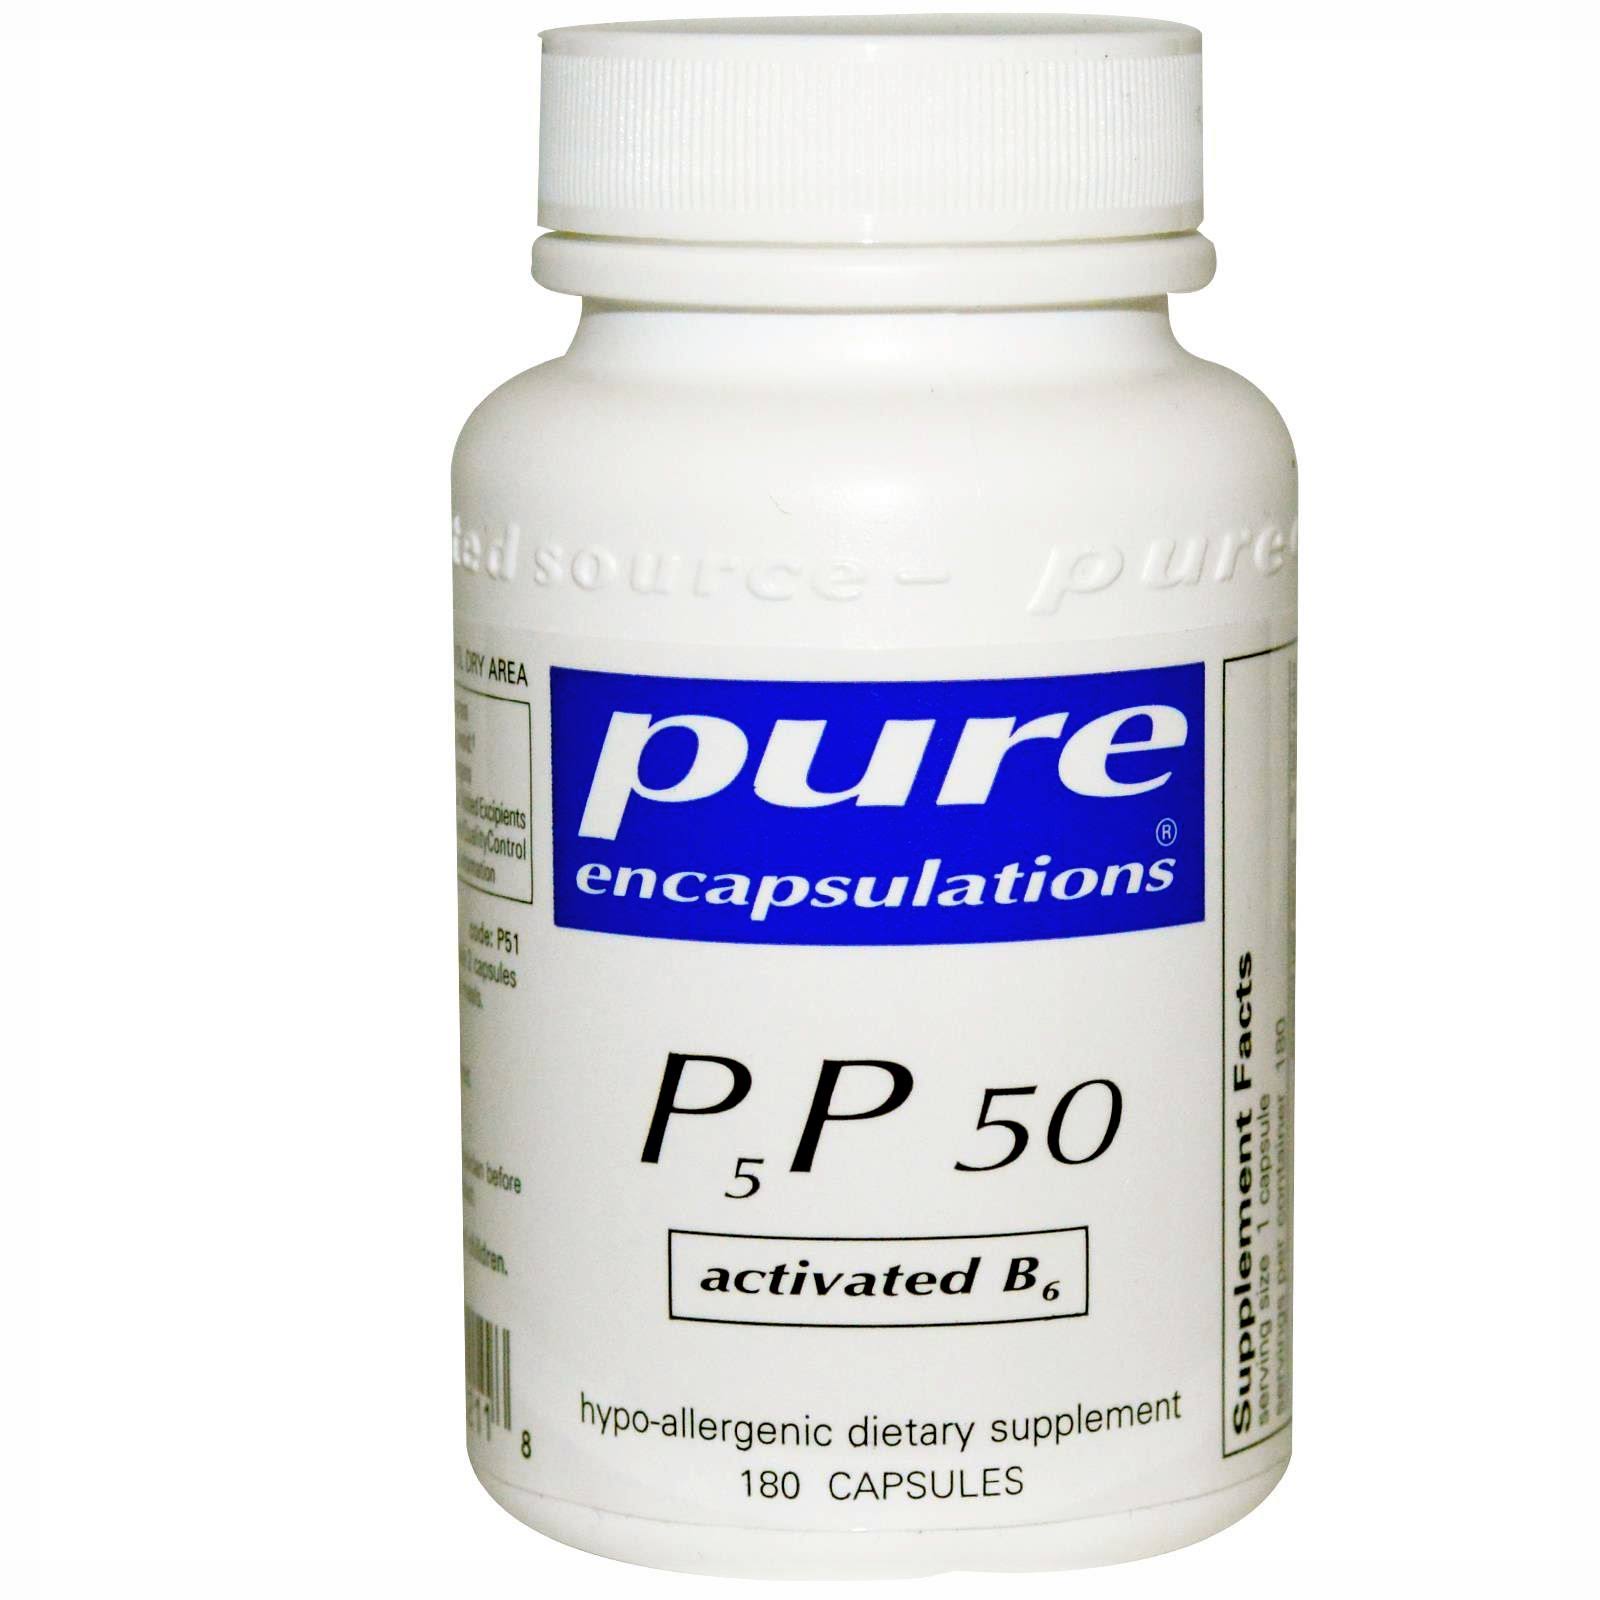 Pure Encapsulations P5P 50 Activated Vitamin B6 Dietary Supplement - 180ct